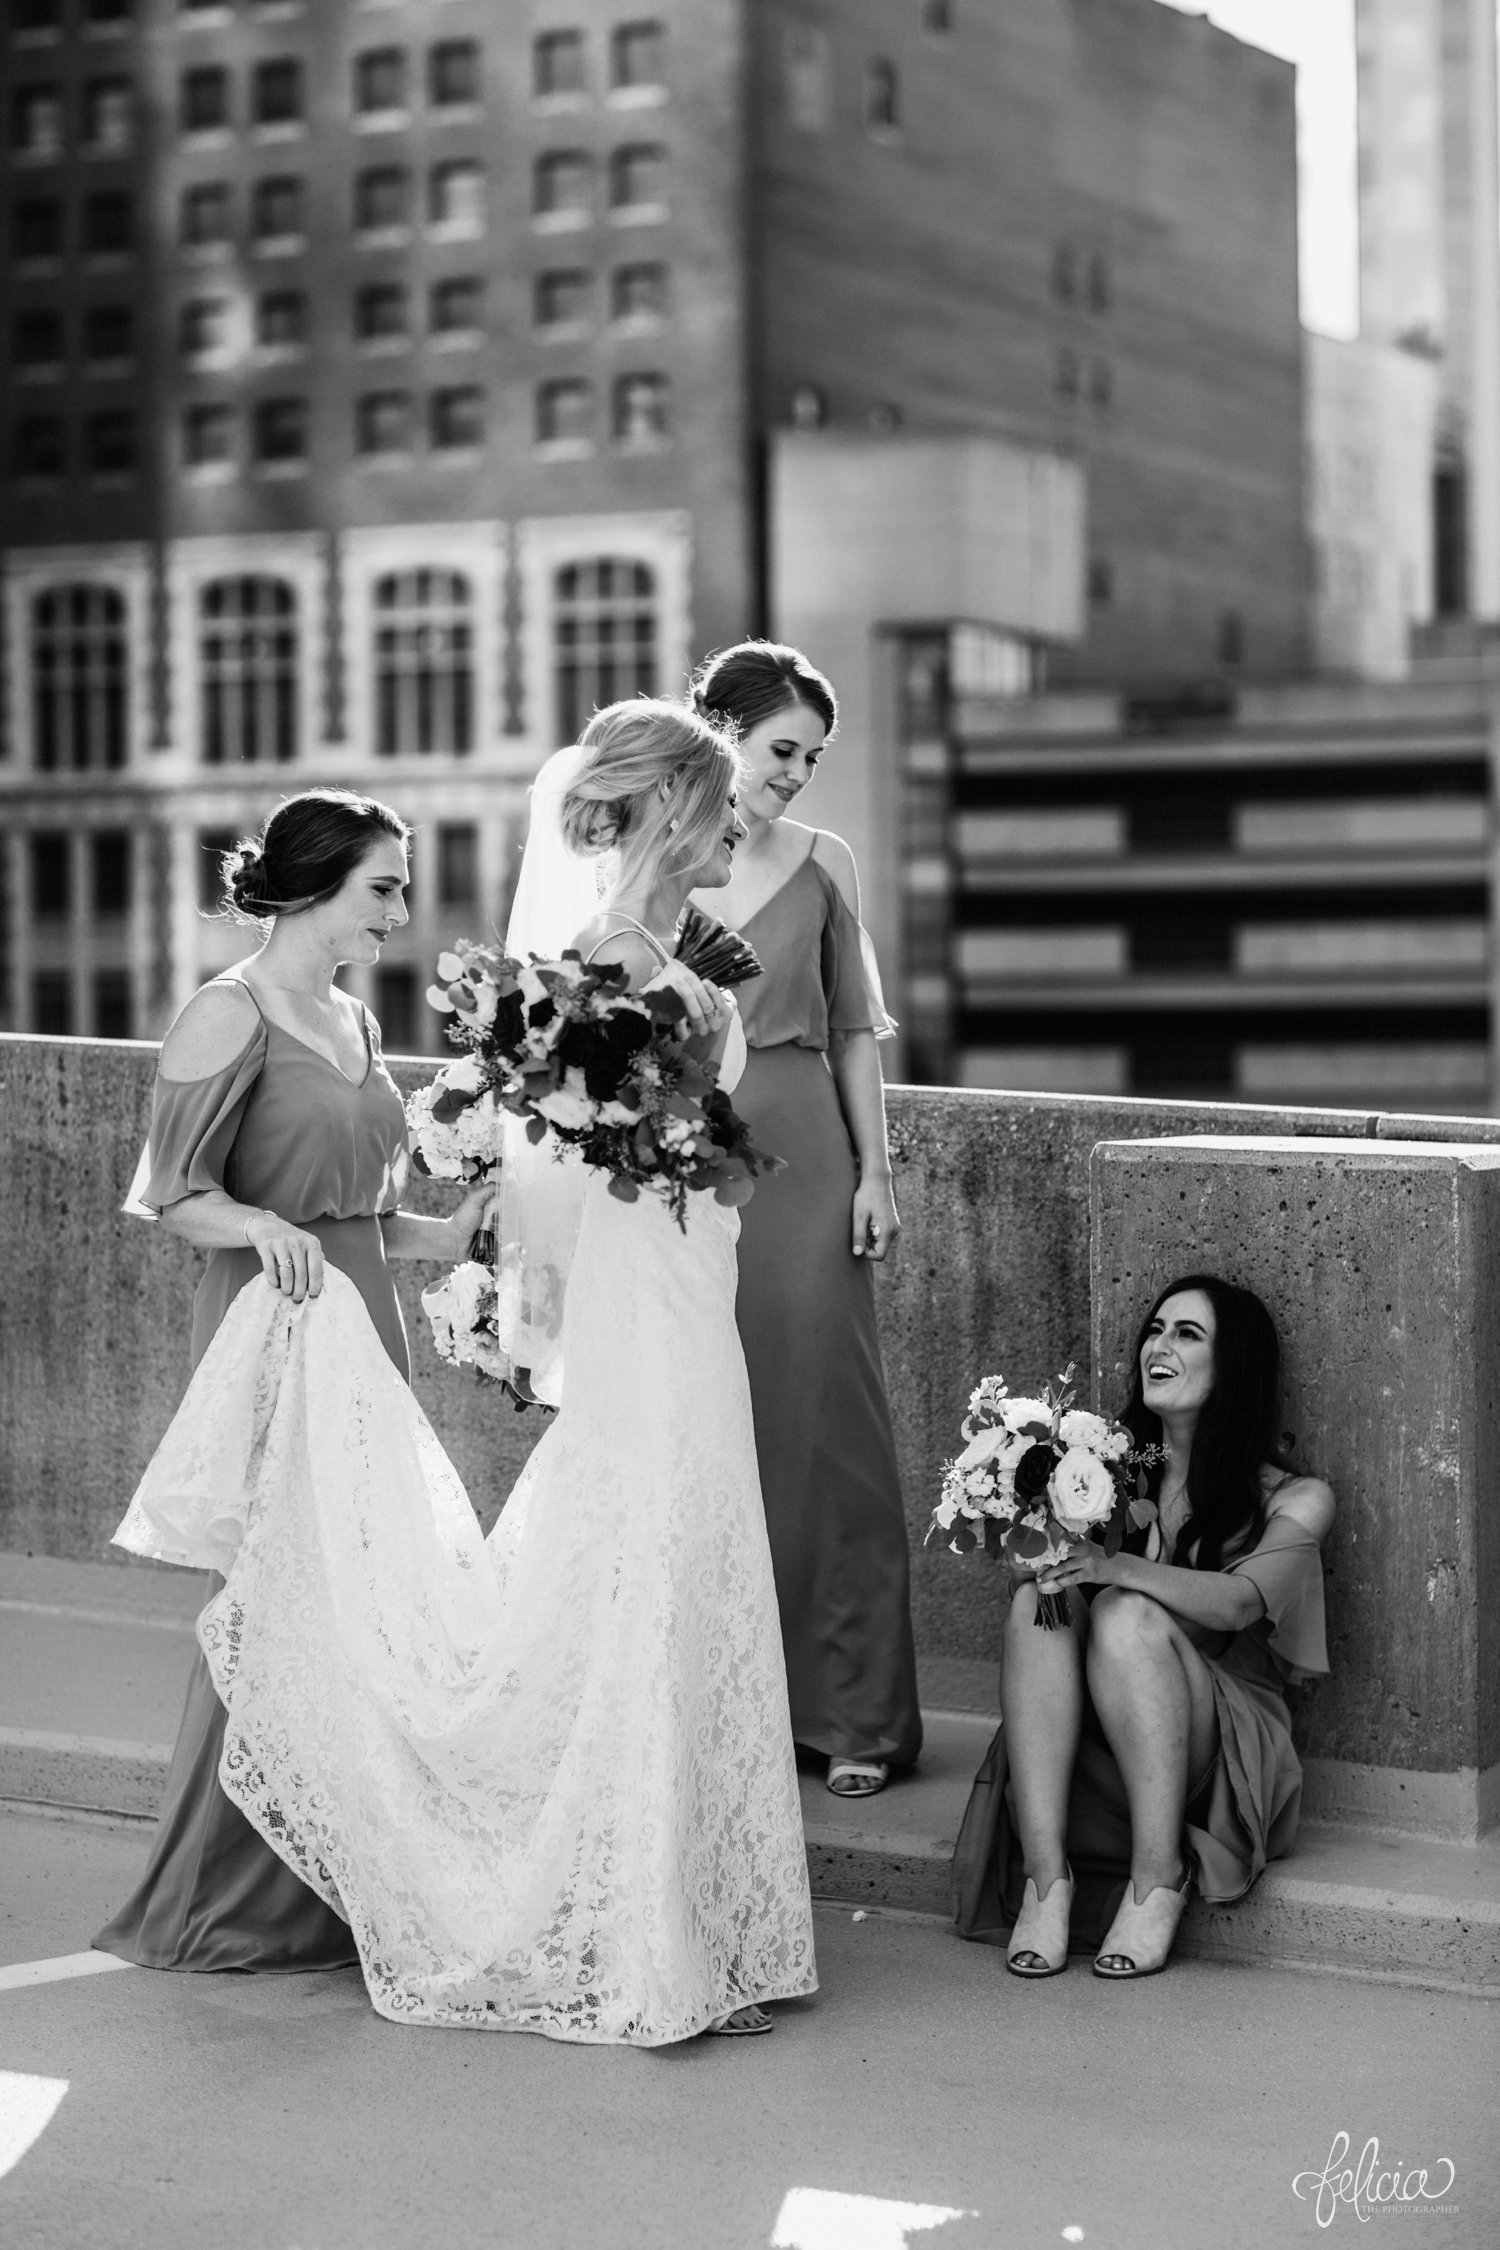 images by feliciathephotographer.com | destination wedding photographer | kansas city | bella bridesmaids | best friends | relaxed vibes | lace dress | fabulous frocks | rooftop | 